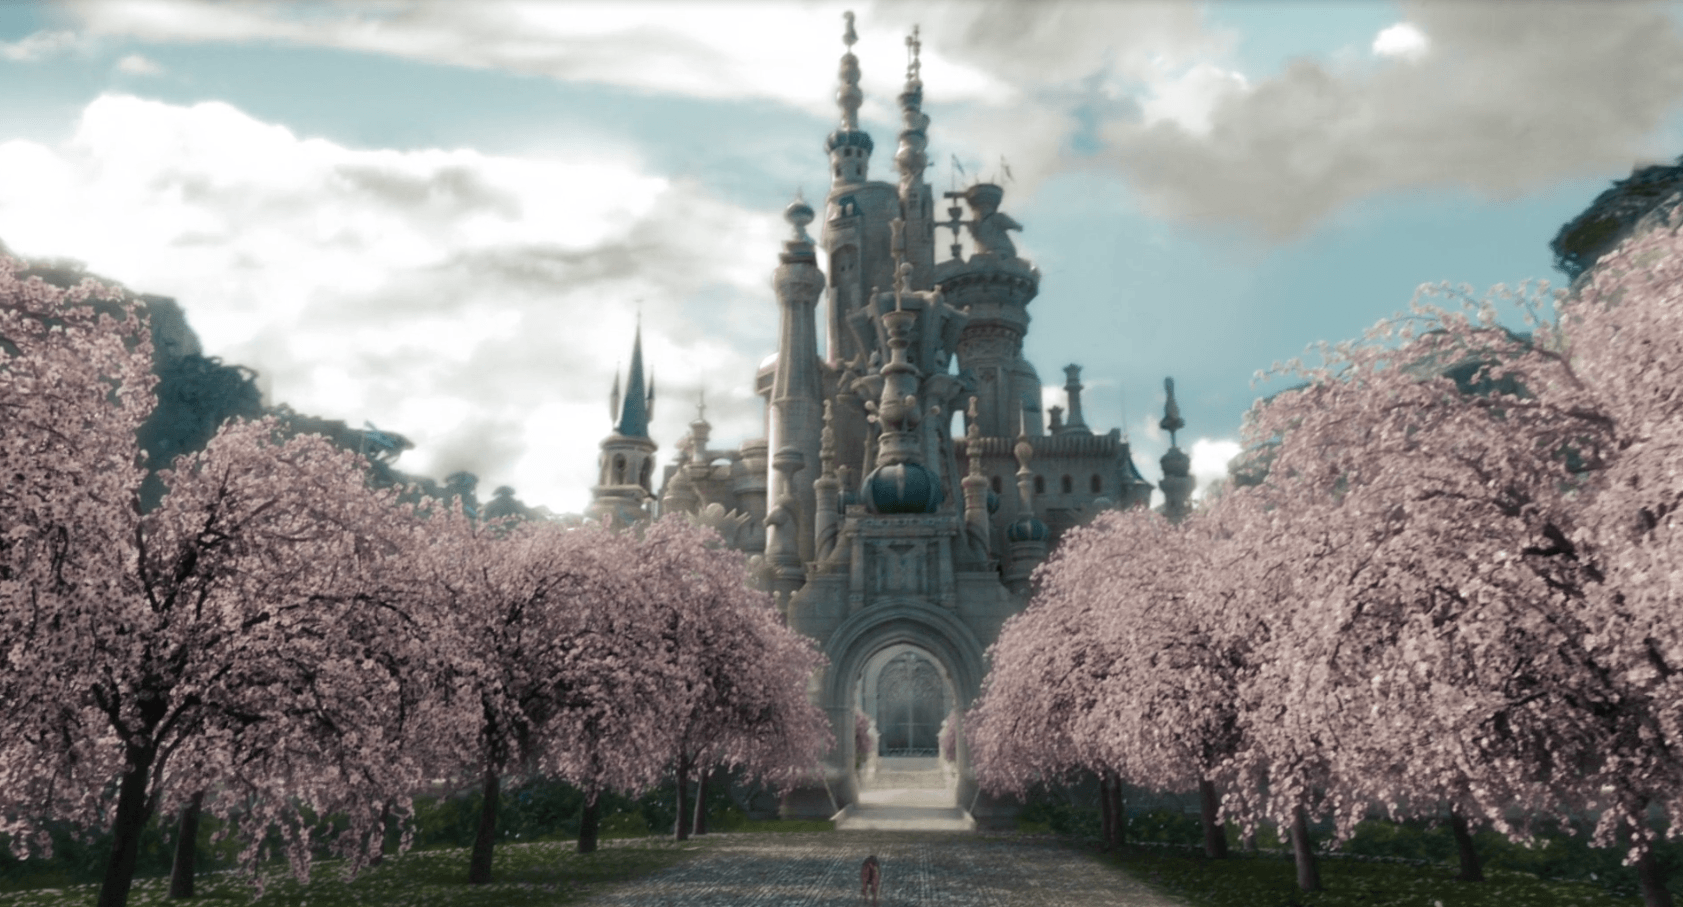 Alice in Wonderland: Set Design, Cinema. The Red List